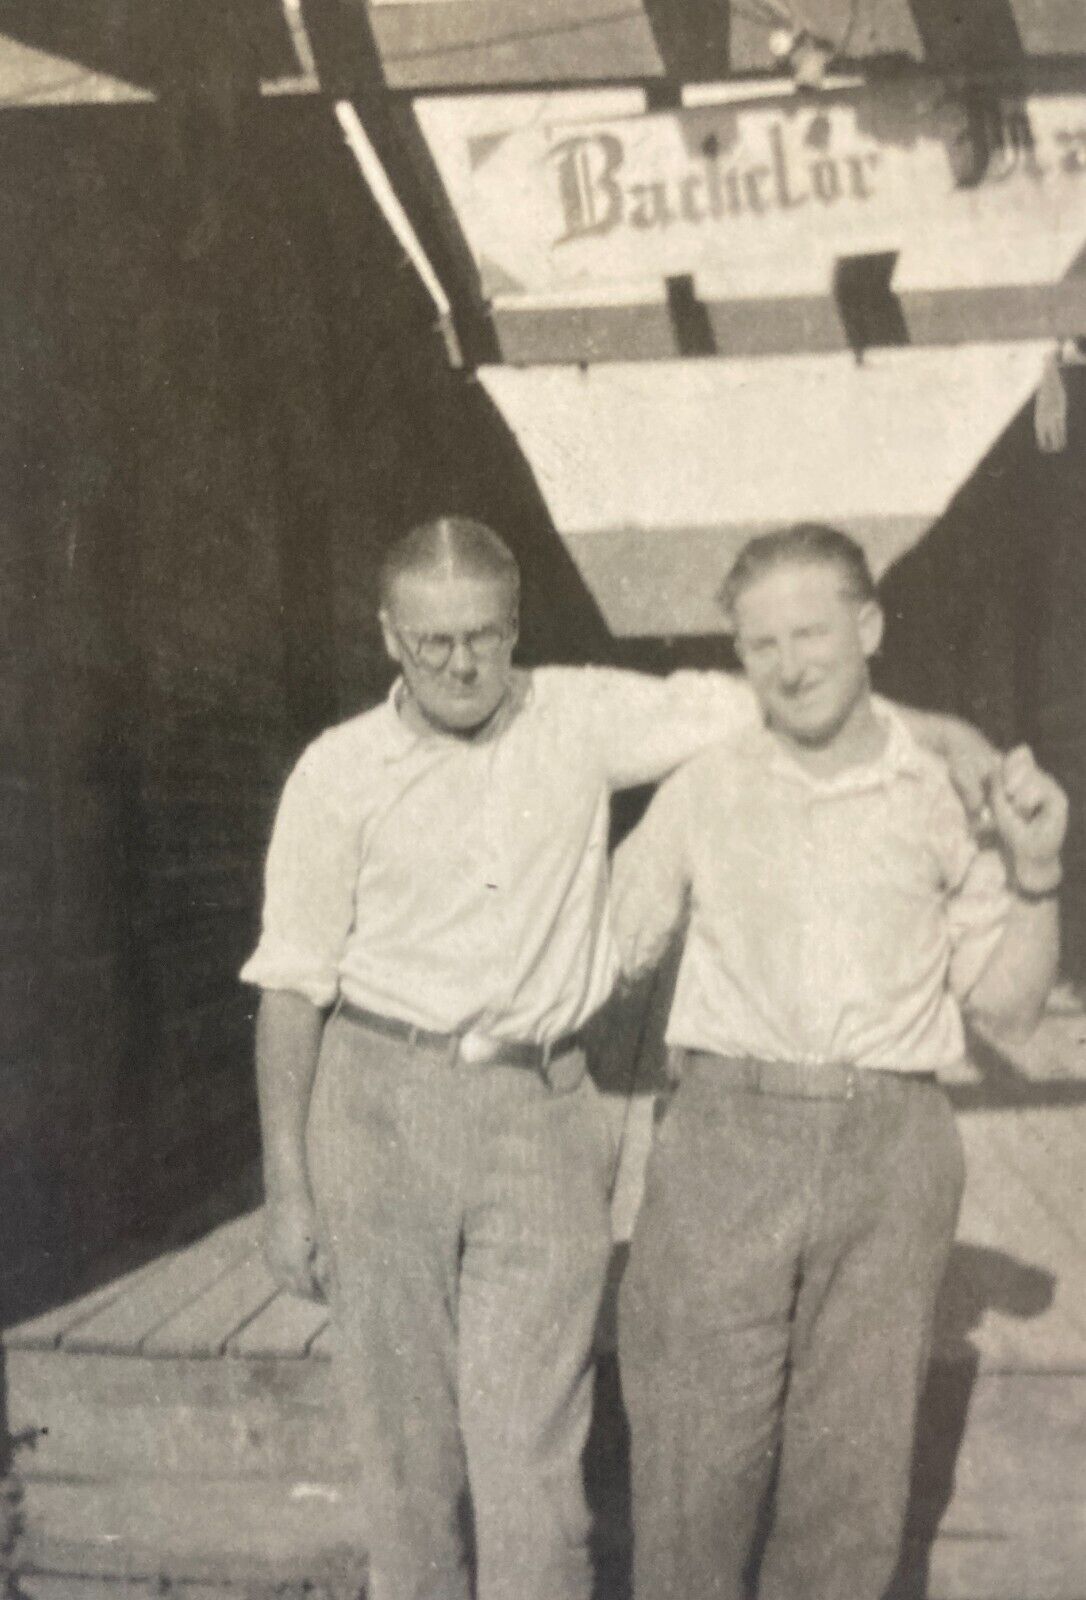 Vintage 1940s Photo Two Affection Men Holding Hands Bachelor Hall Gay Interest